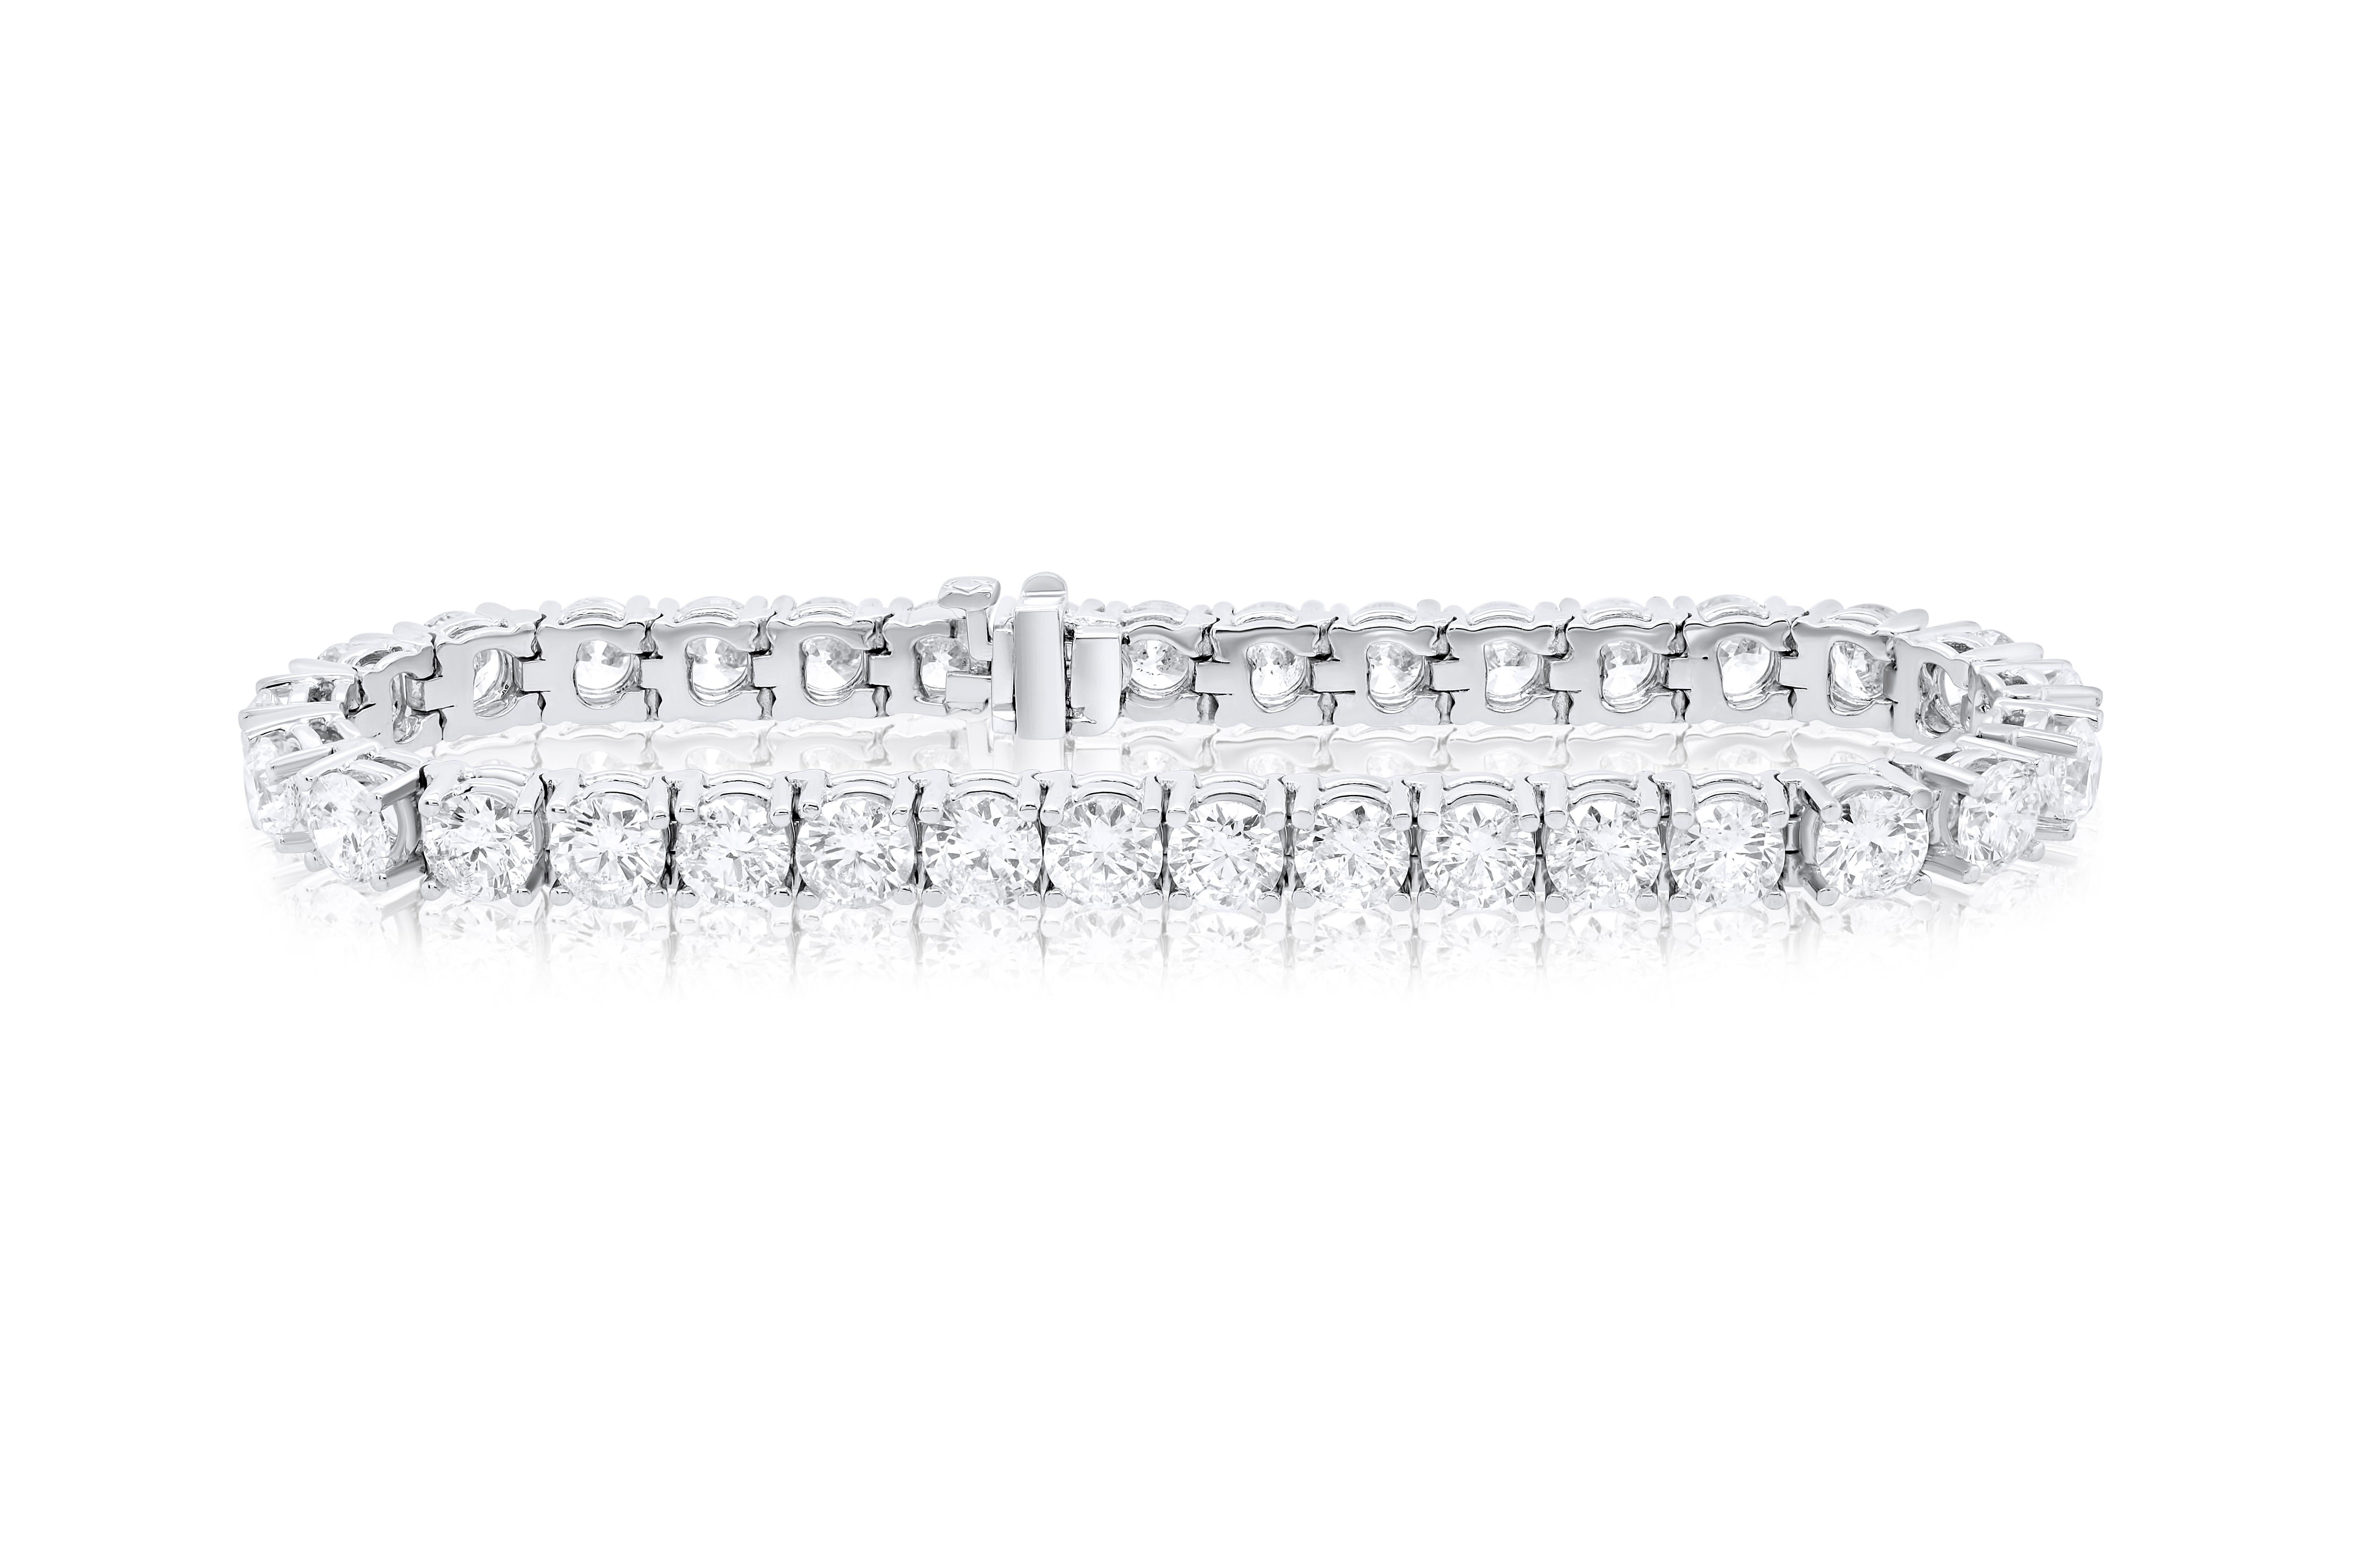 18 kt white gold 4 prong diamond tennis bracelet  16.70 cts of round diamonds 0.50 each carat 33 stones FG color SI clarity.  Excellent Cut.
